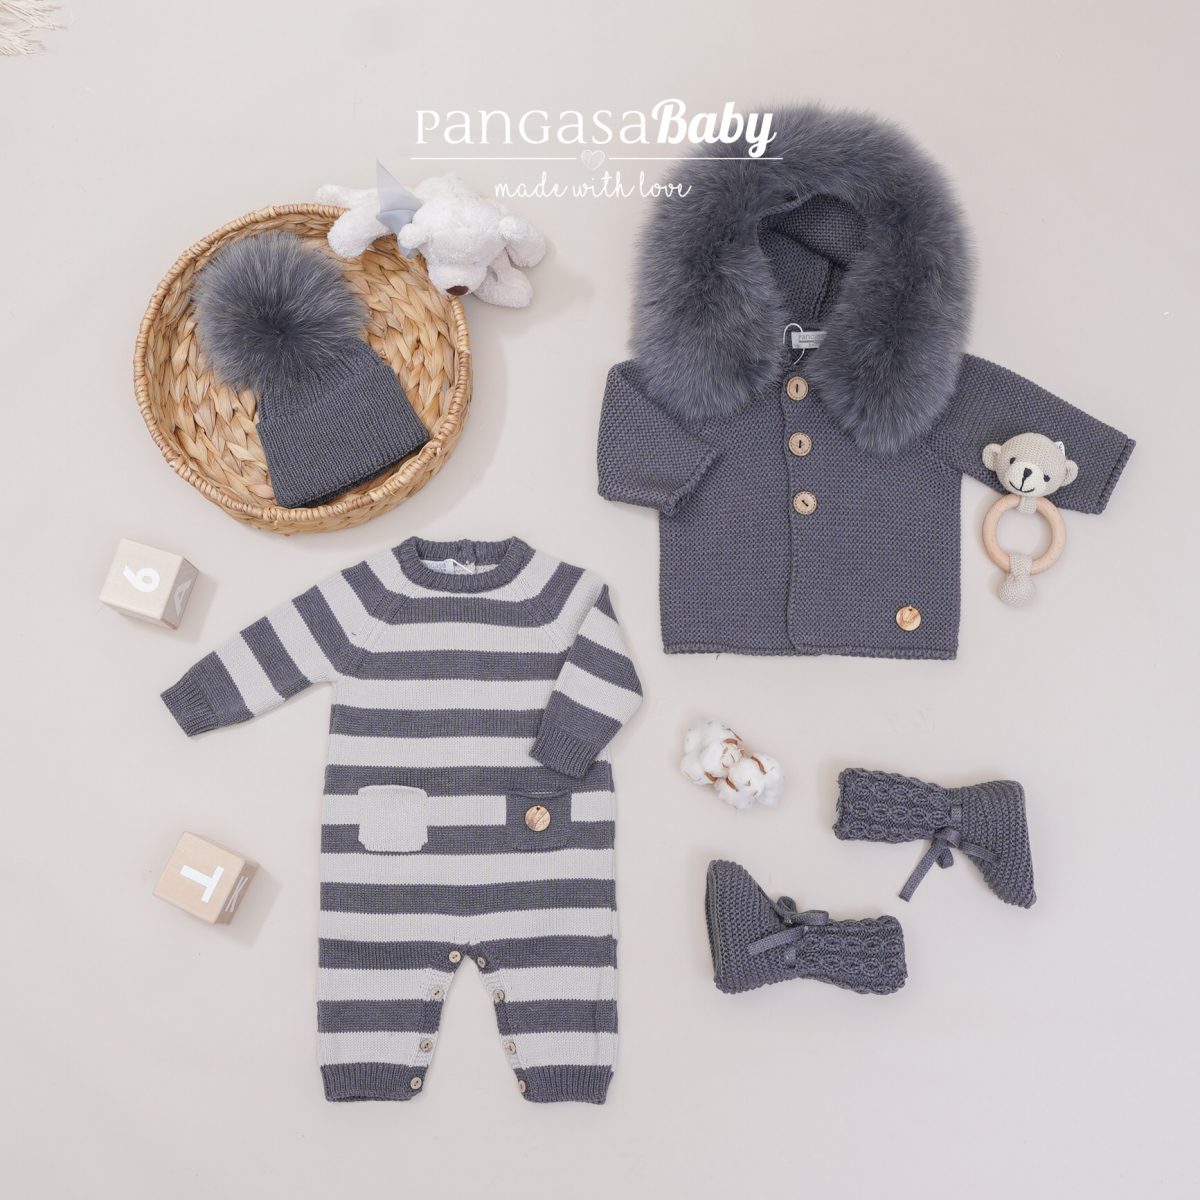 pangasa baby winter collection